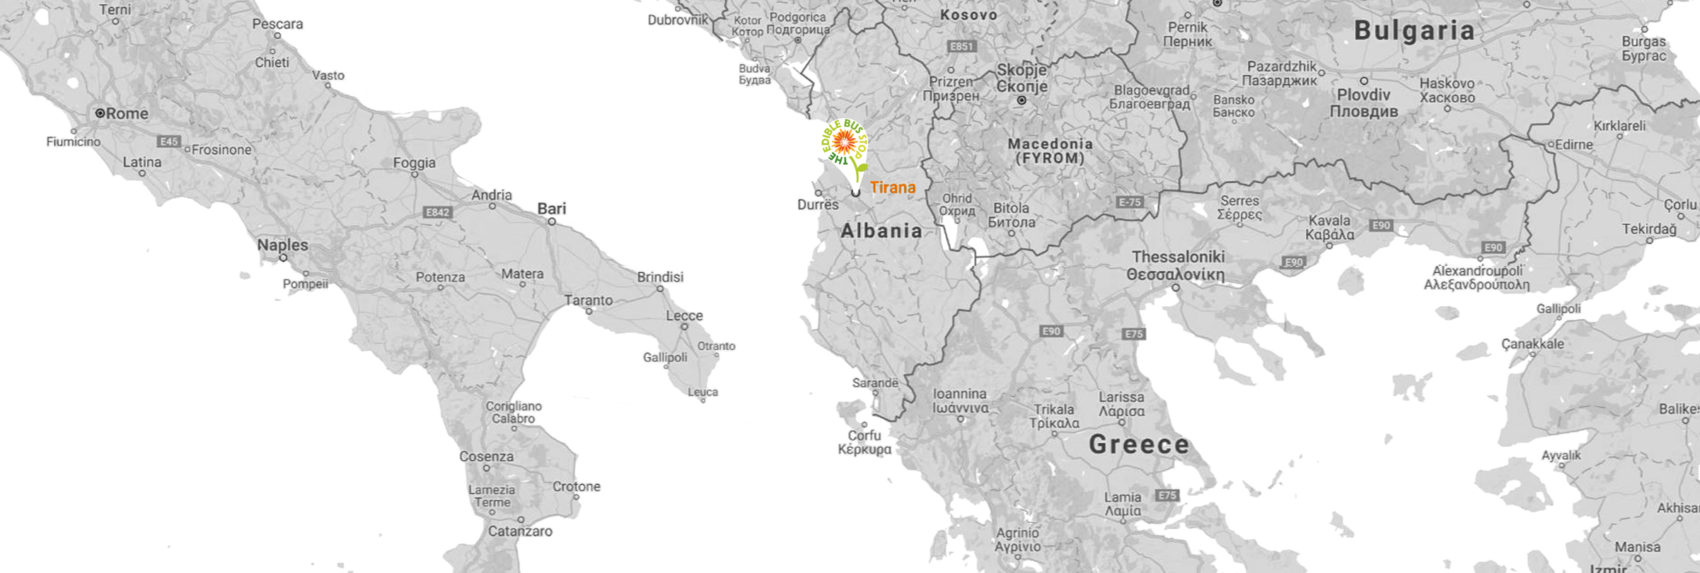 Map_Albania-1700x573